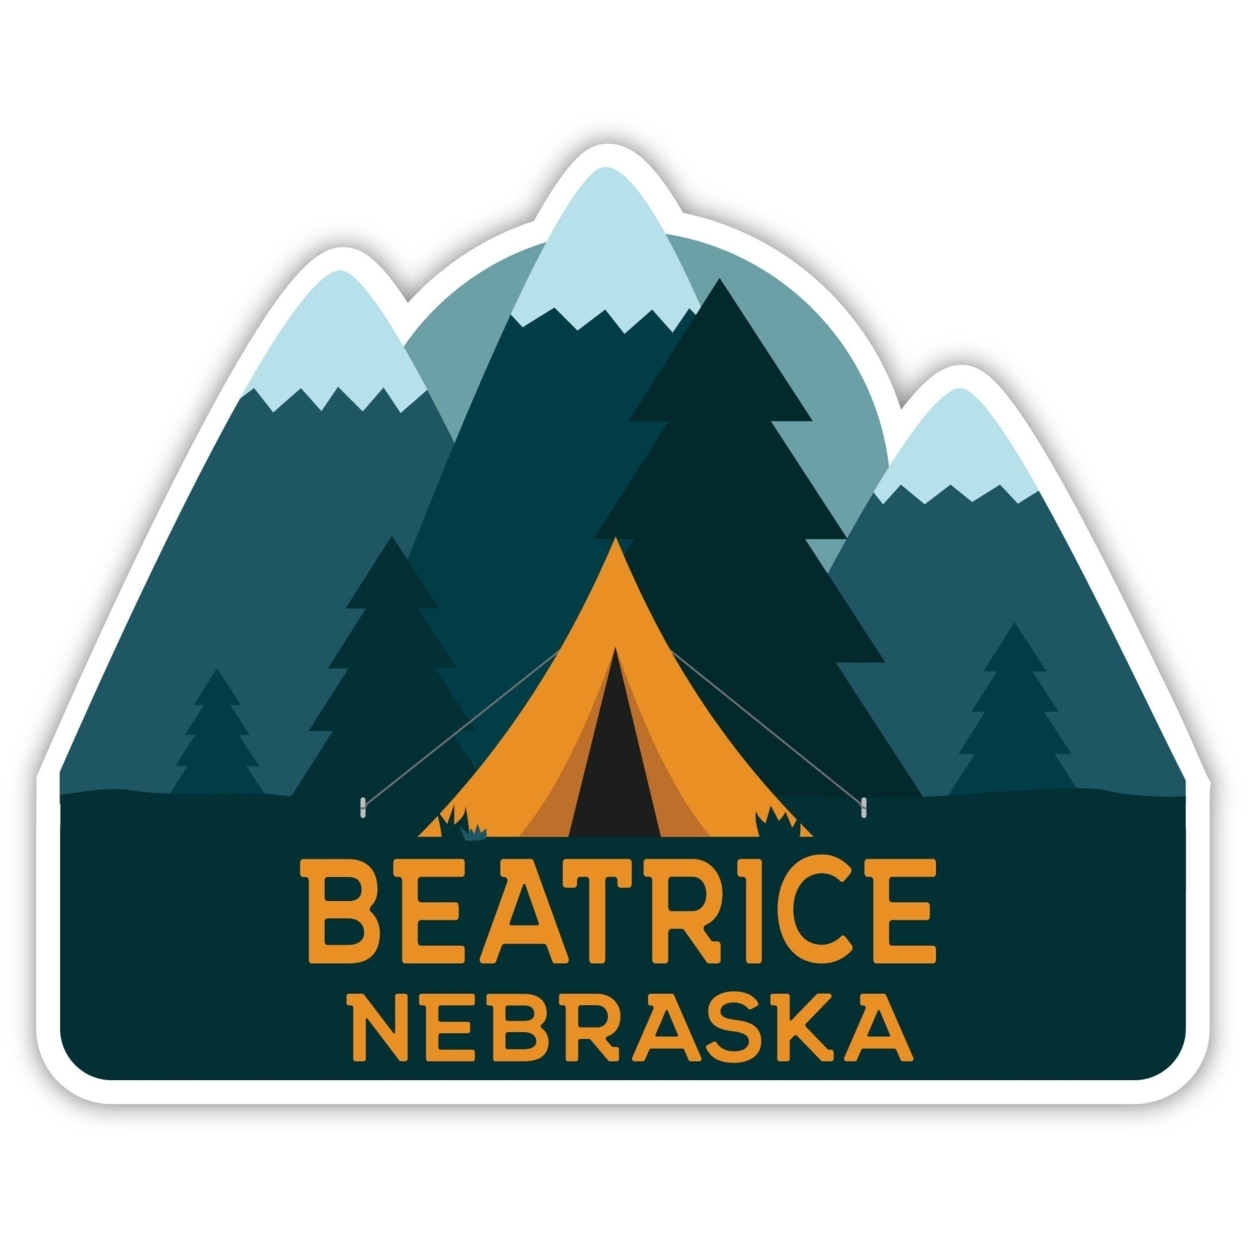 Beatrice Nebraska Souvenir Decorative Stickers (Choose Theme And Size) - 4-Pack, 4-Inch, Tent